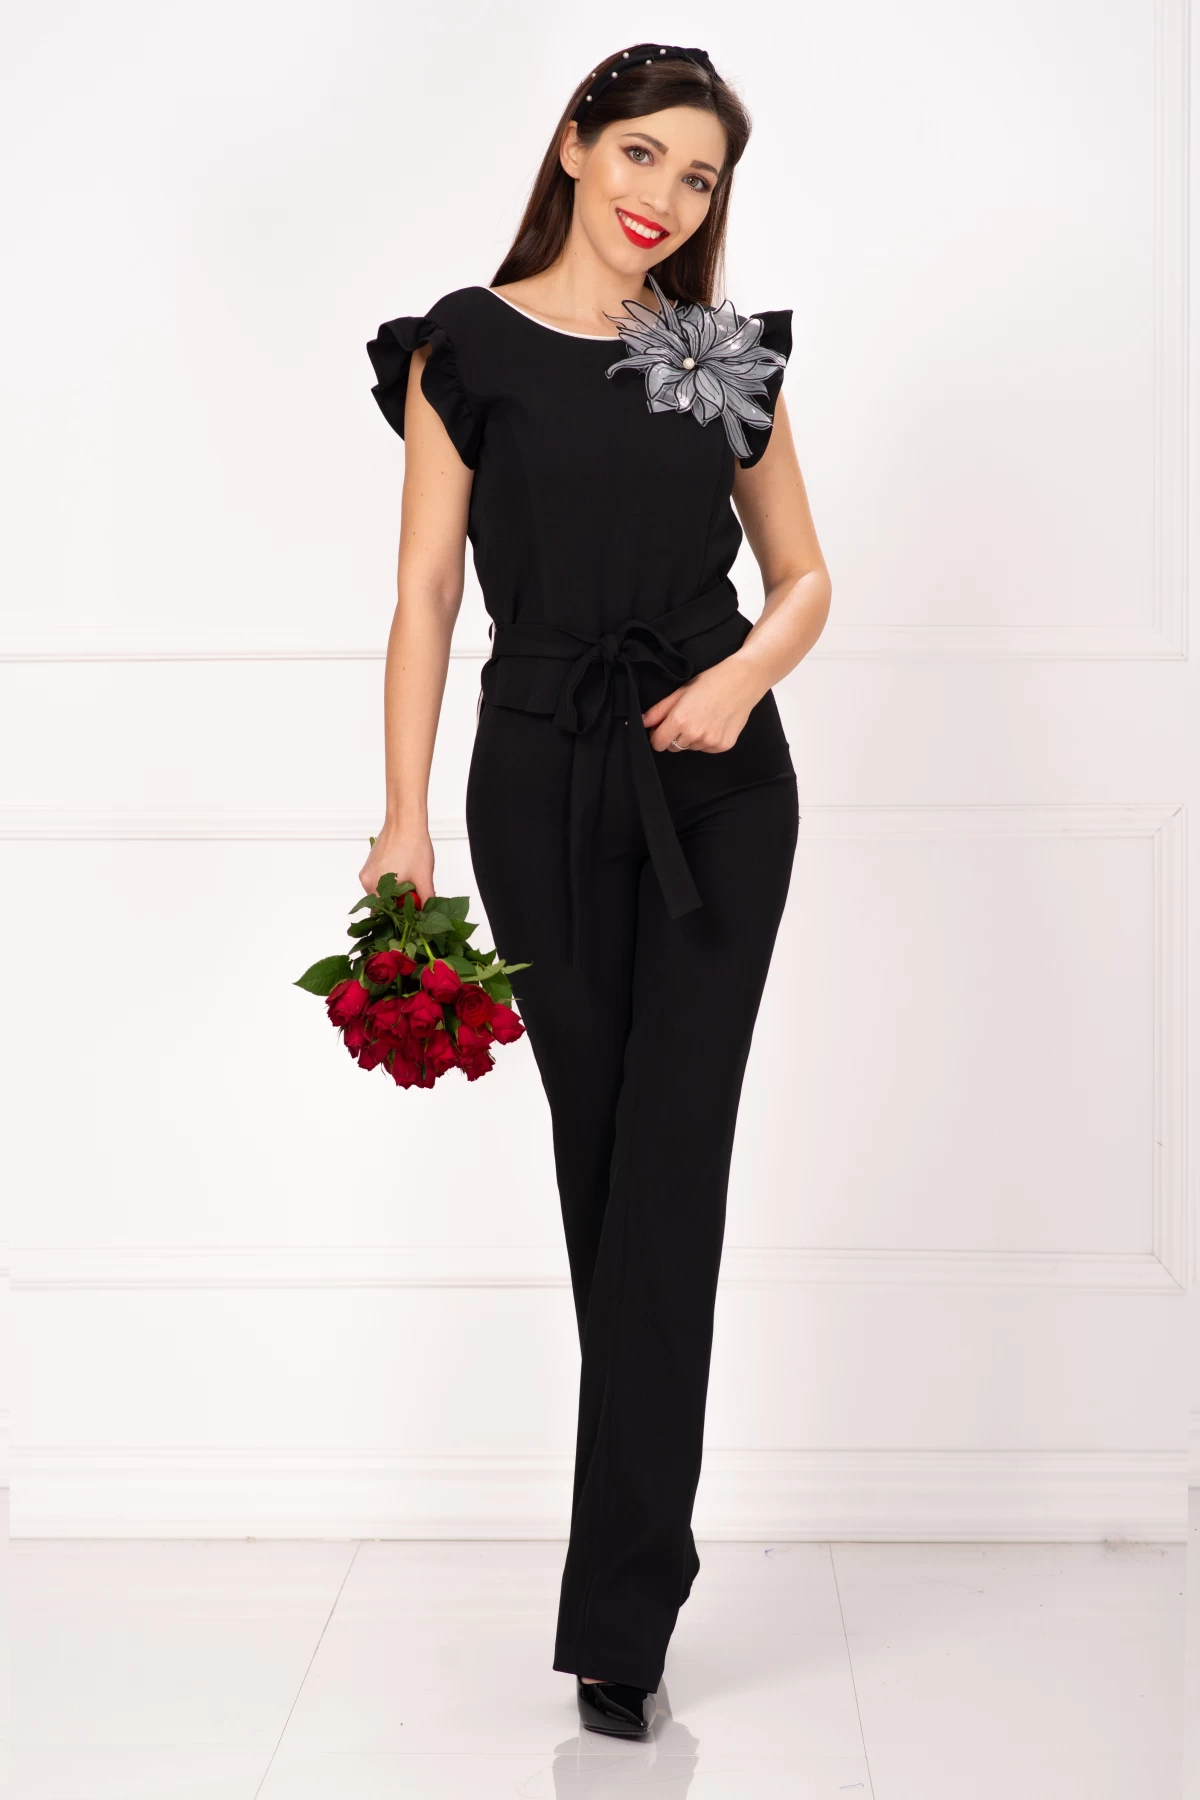 Compleu elegant negru cu pantalon evazat si bluza cu floare 3D